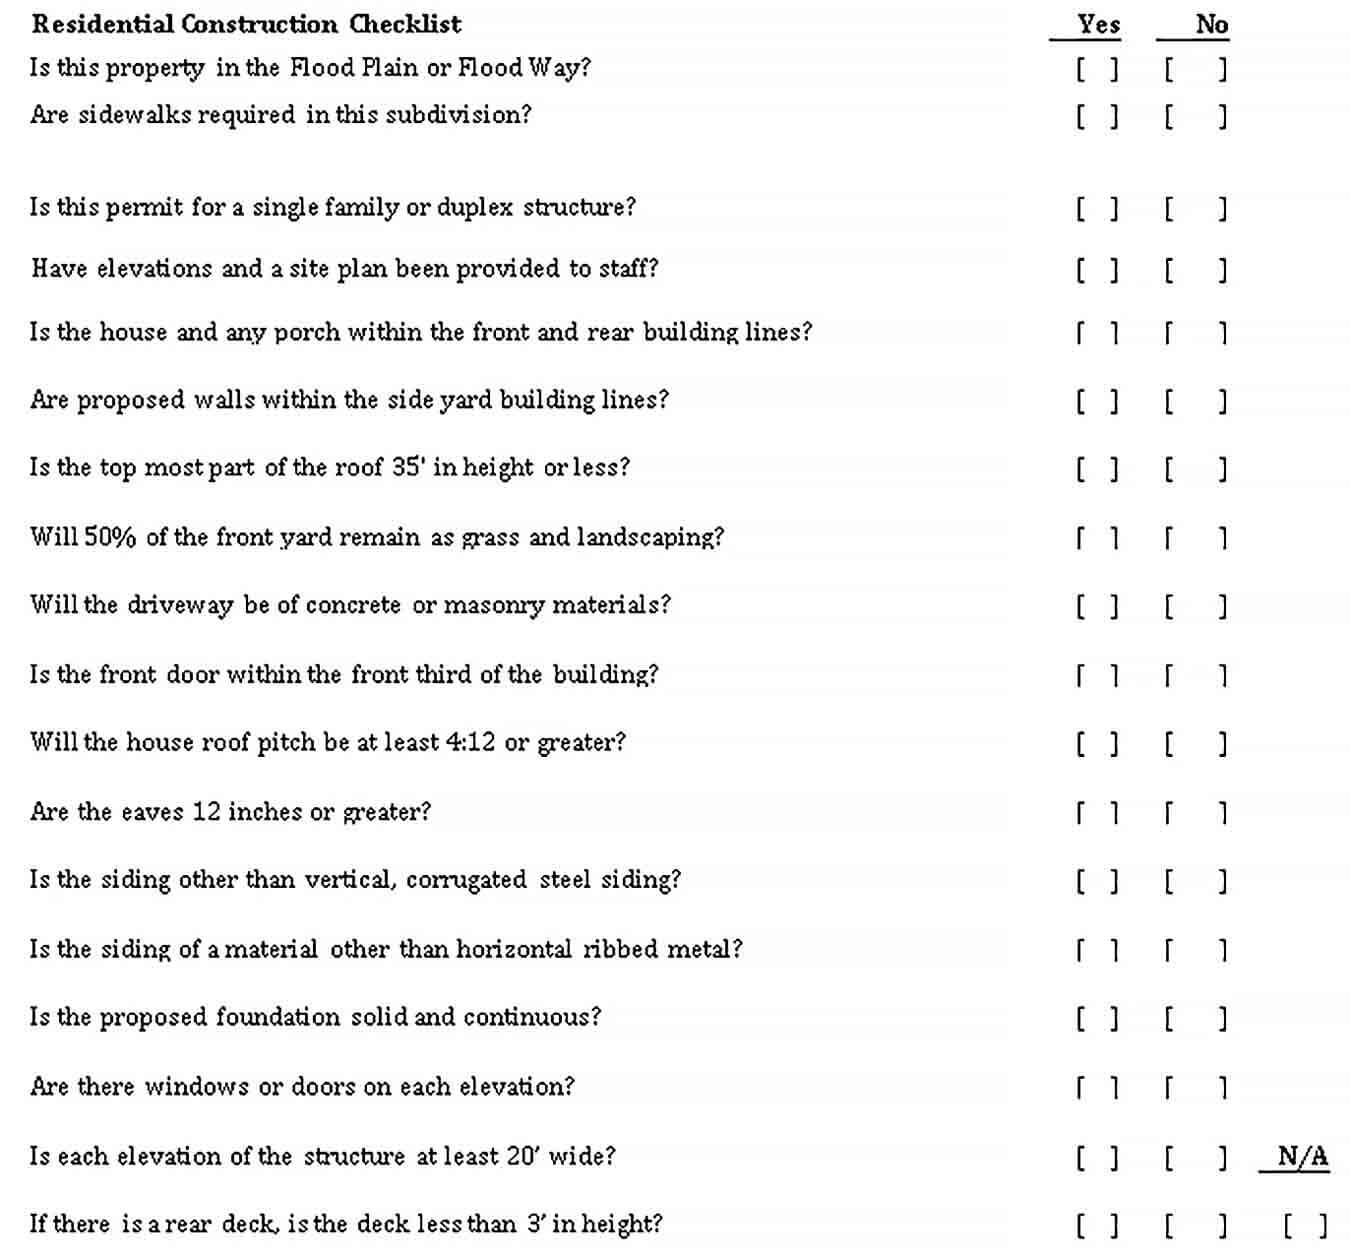 Sample Residential Construction Checklist